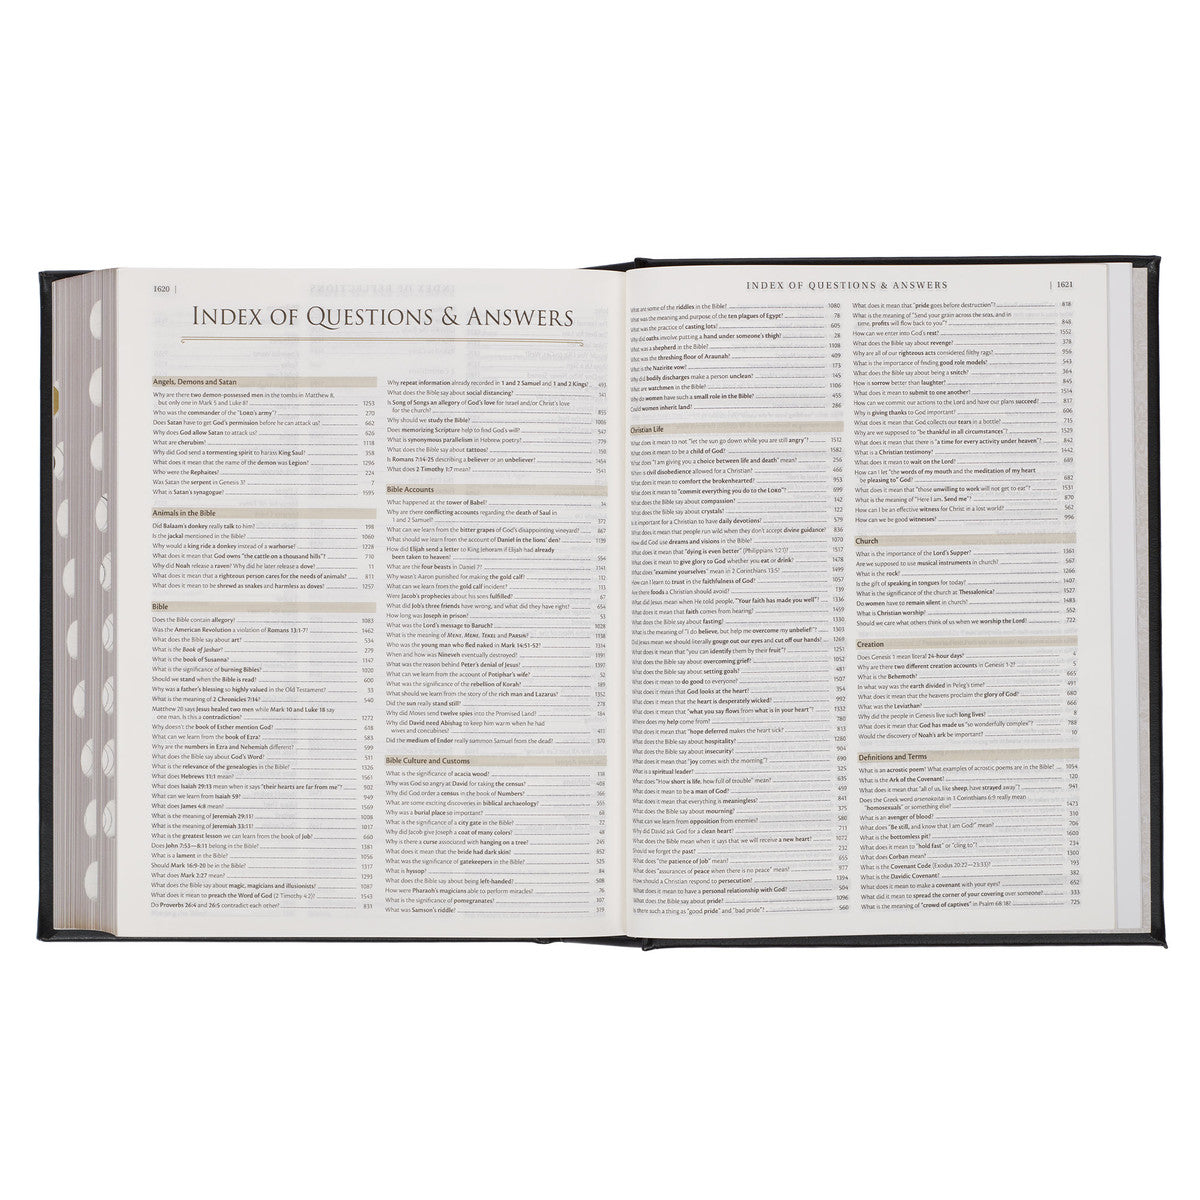 NLT Family Heritage Bible, Large Print